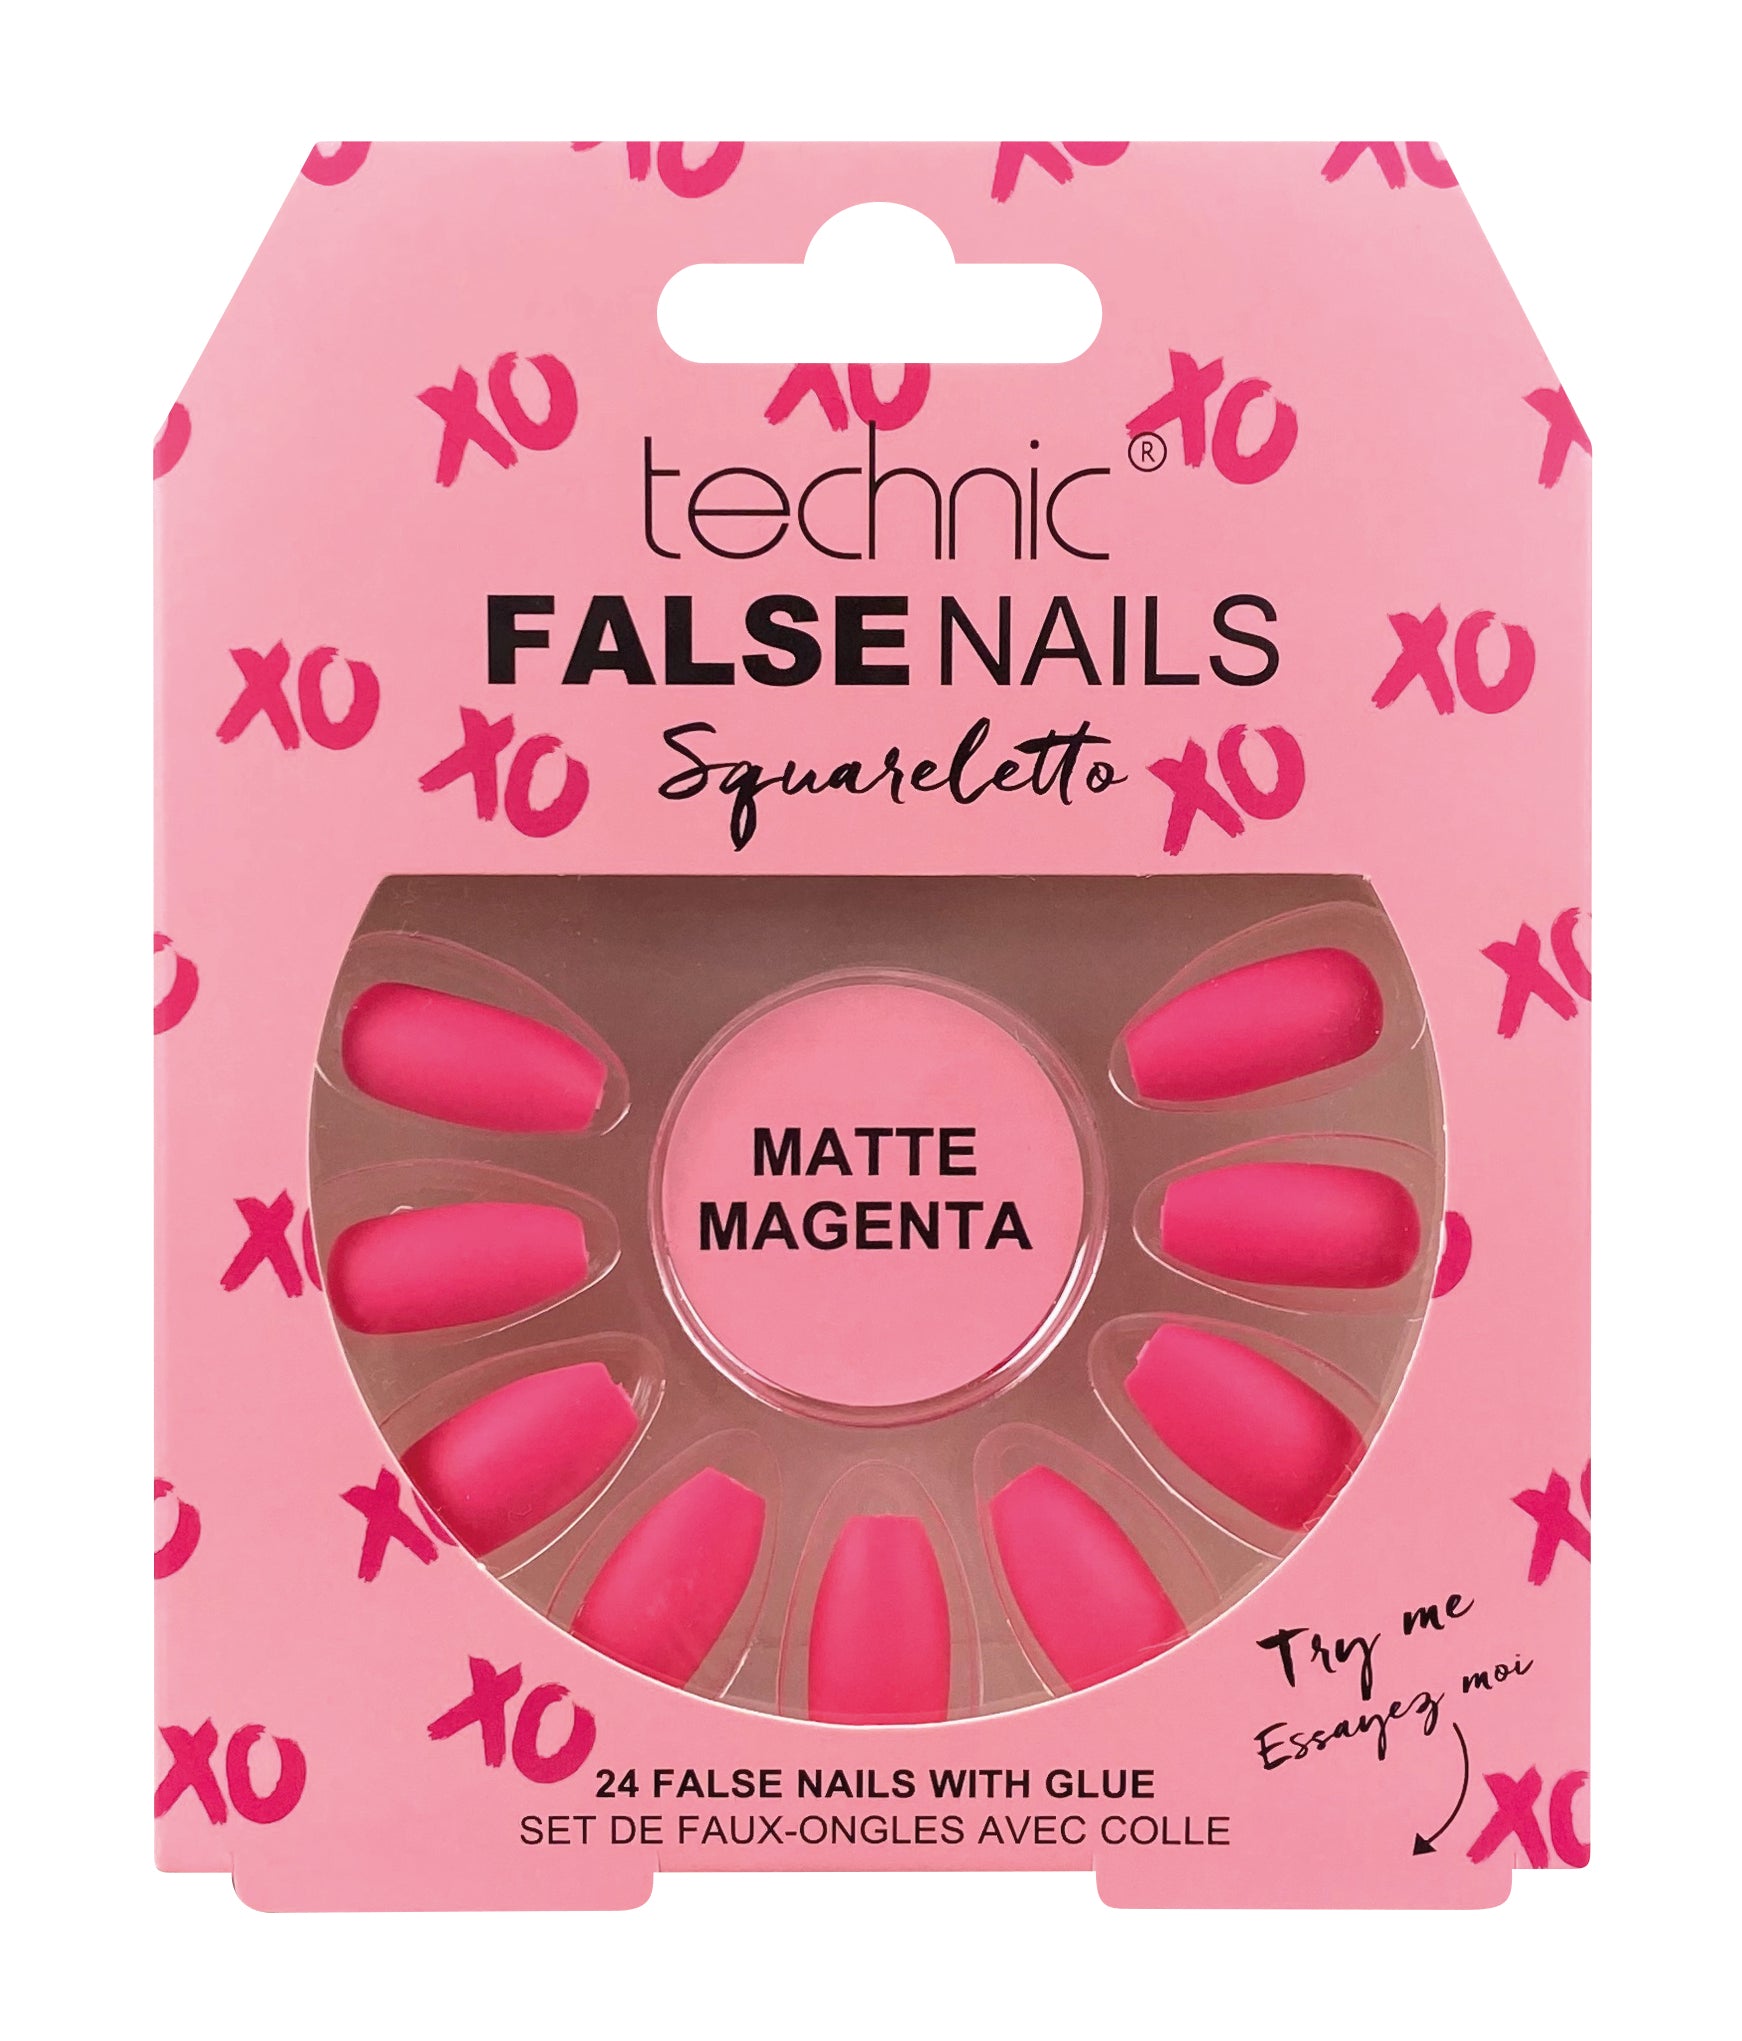 Technic False Nails - Squareletto Matte Magenta